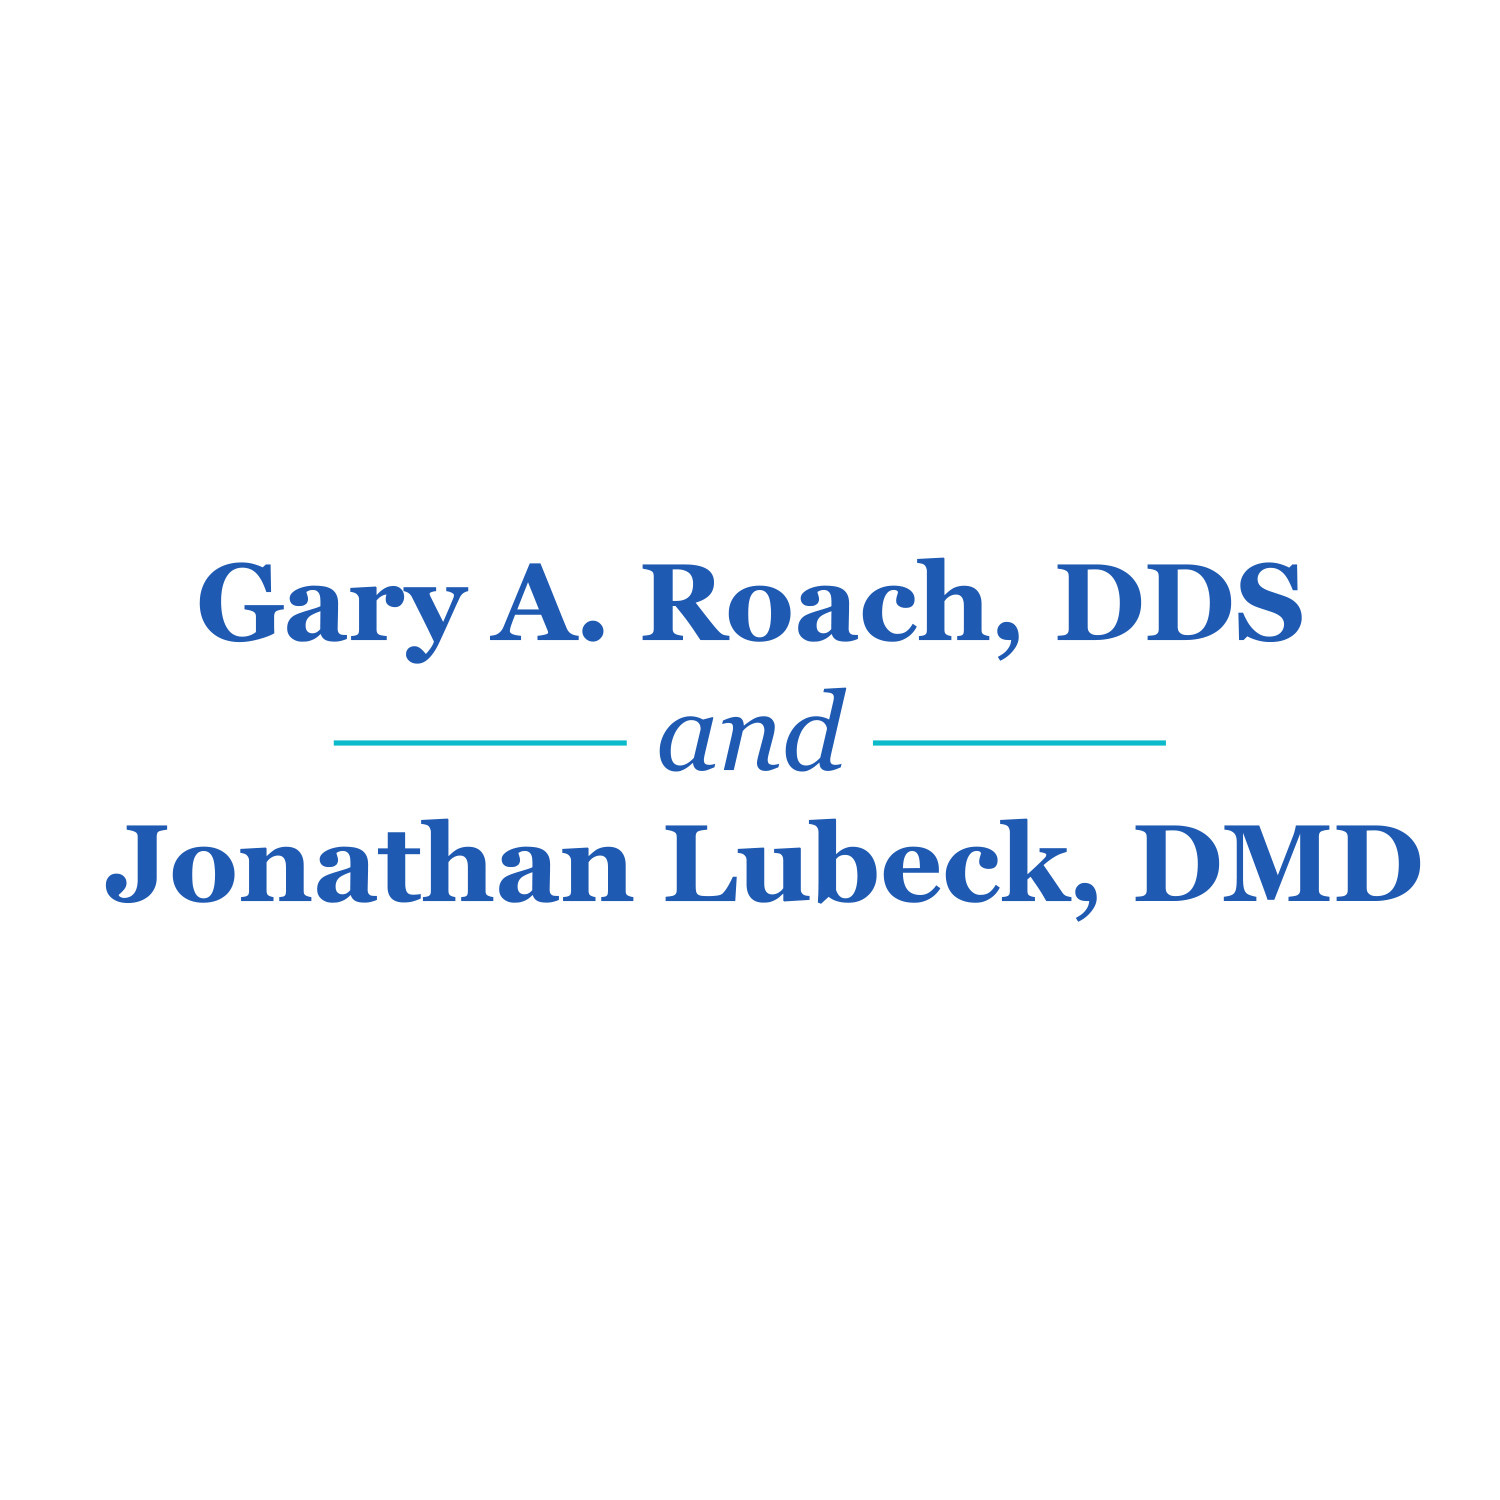 Gary A. Roach, DDS and Jonathan Lubeck, DMD